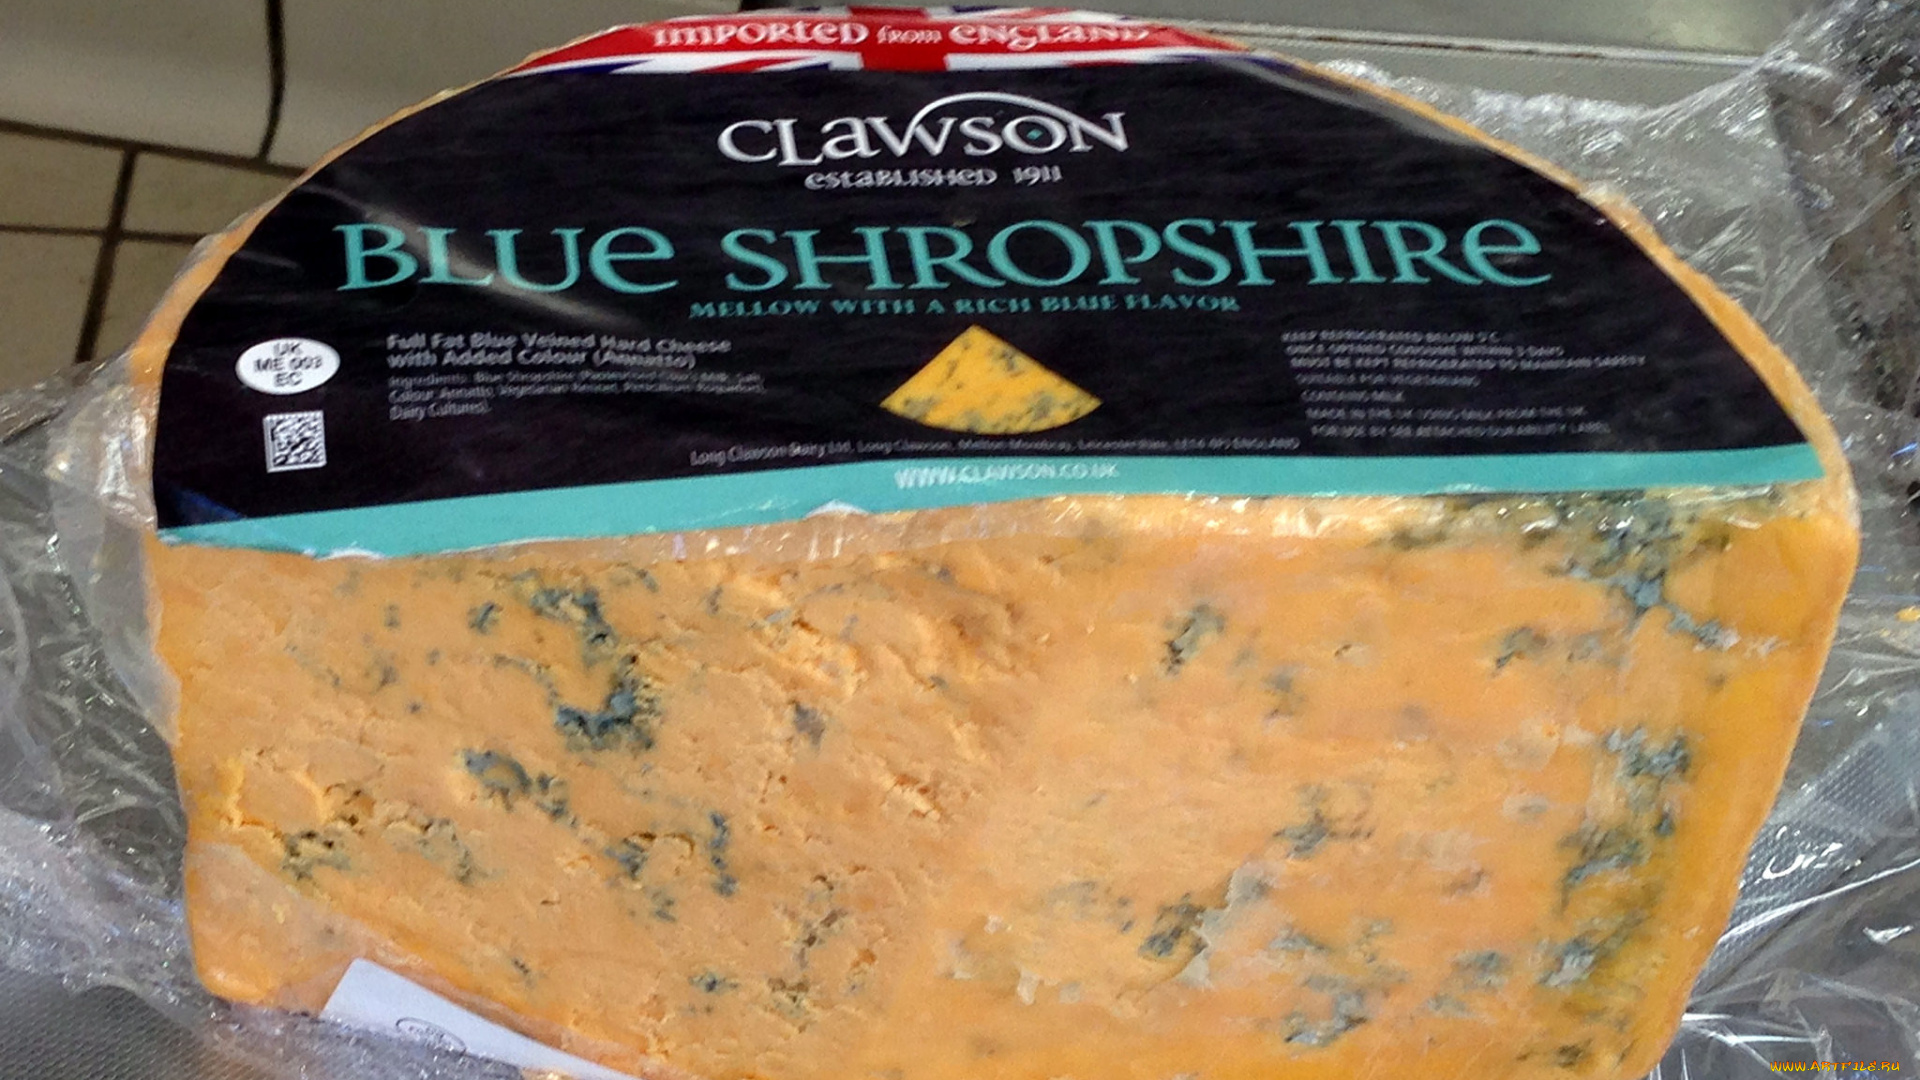 shropshire, blue, еда, сырные, изделия, сыр